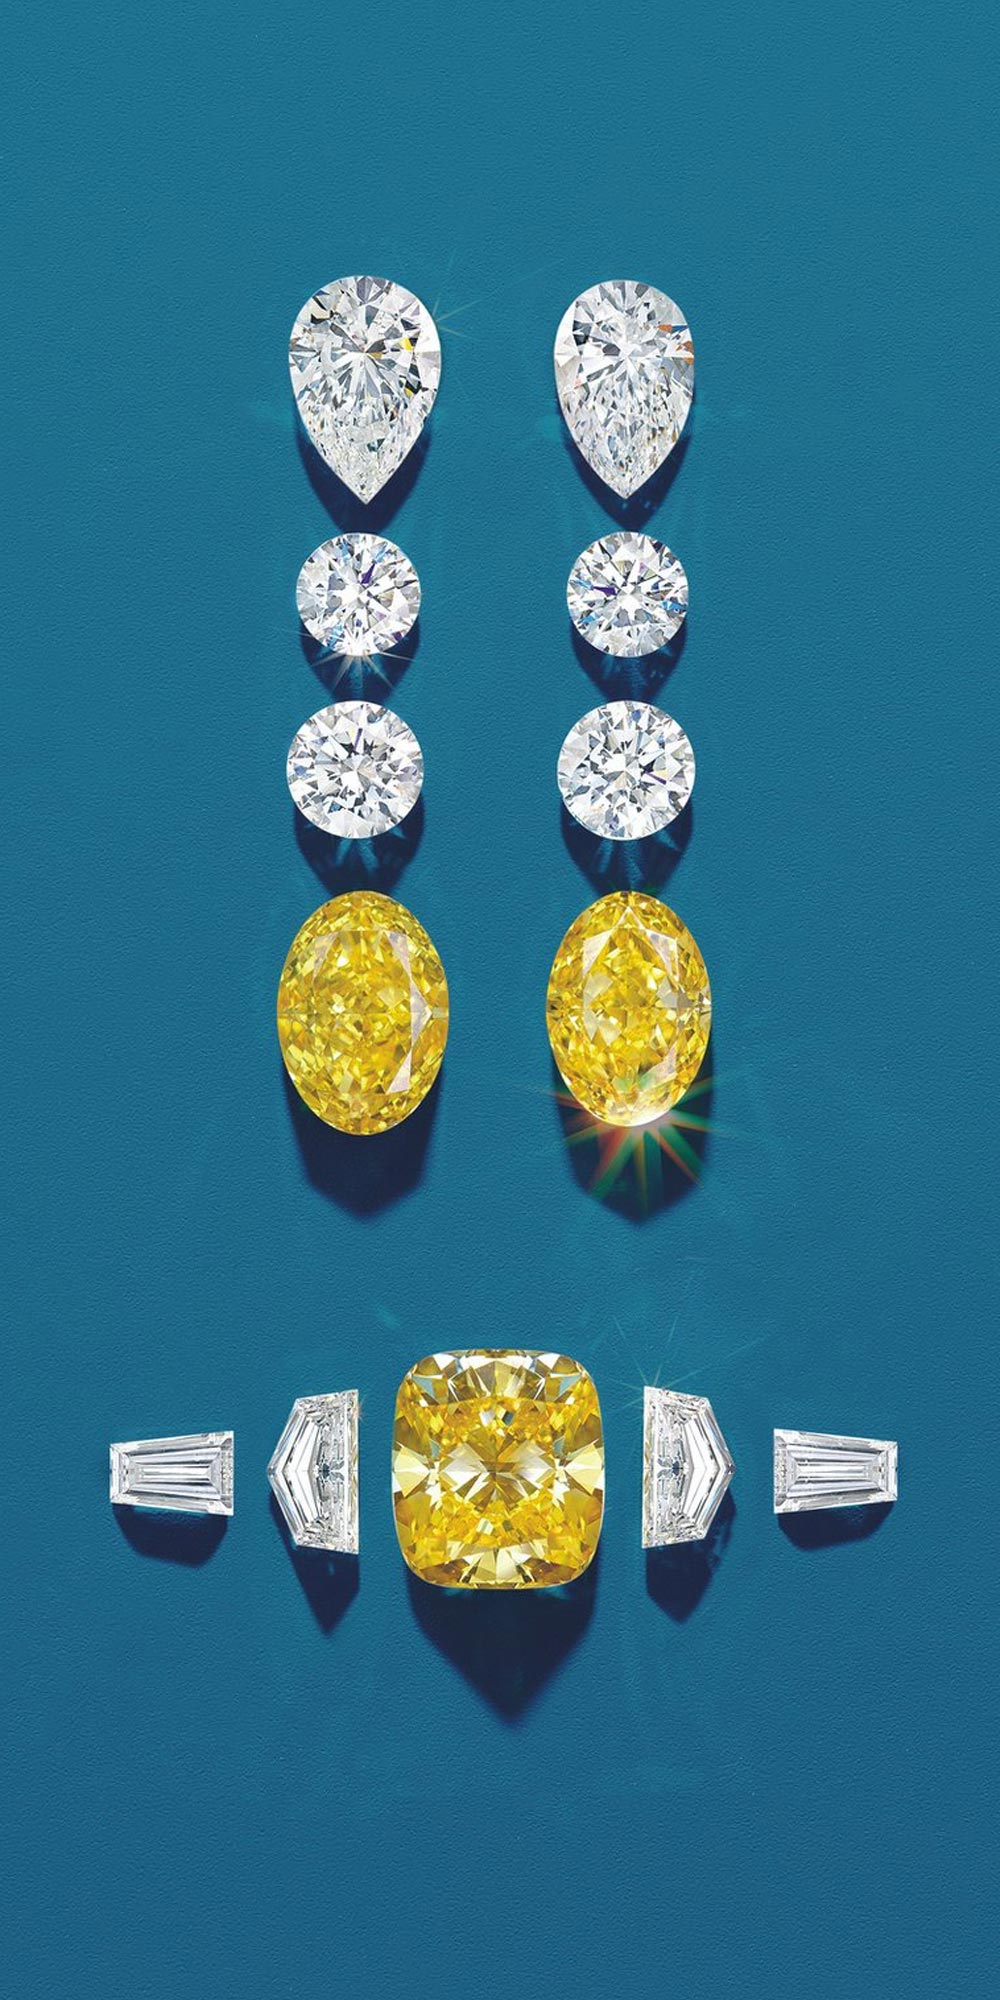 David Douglas Diamonds & Jewelry Marietta, GA